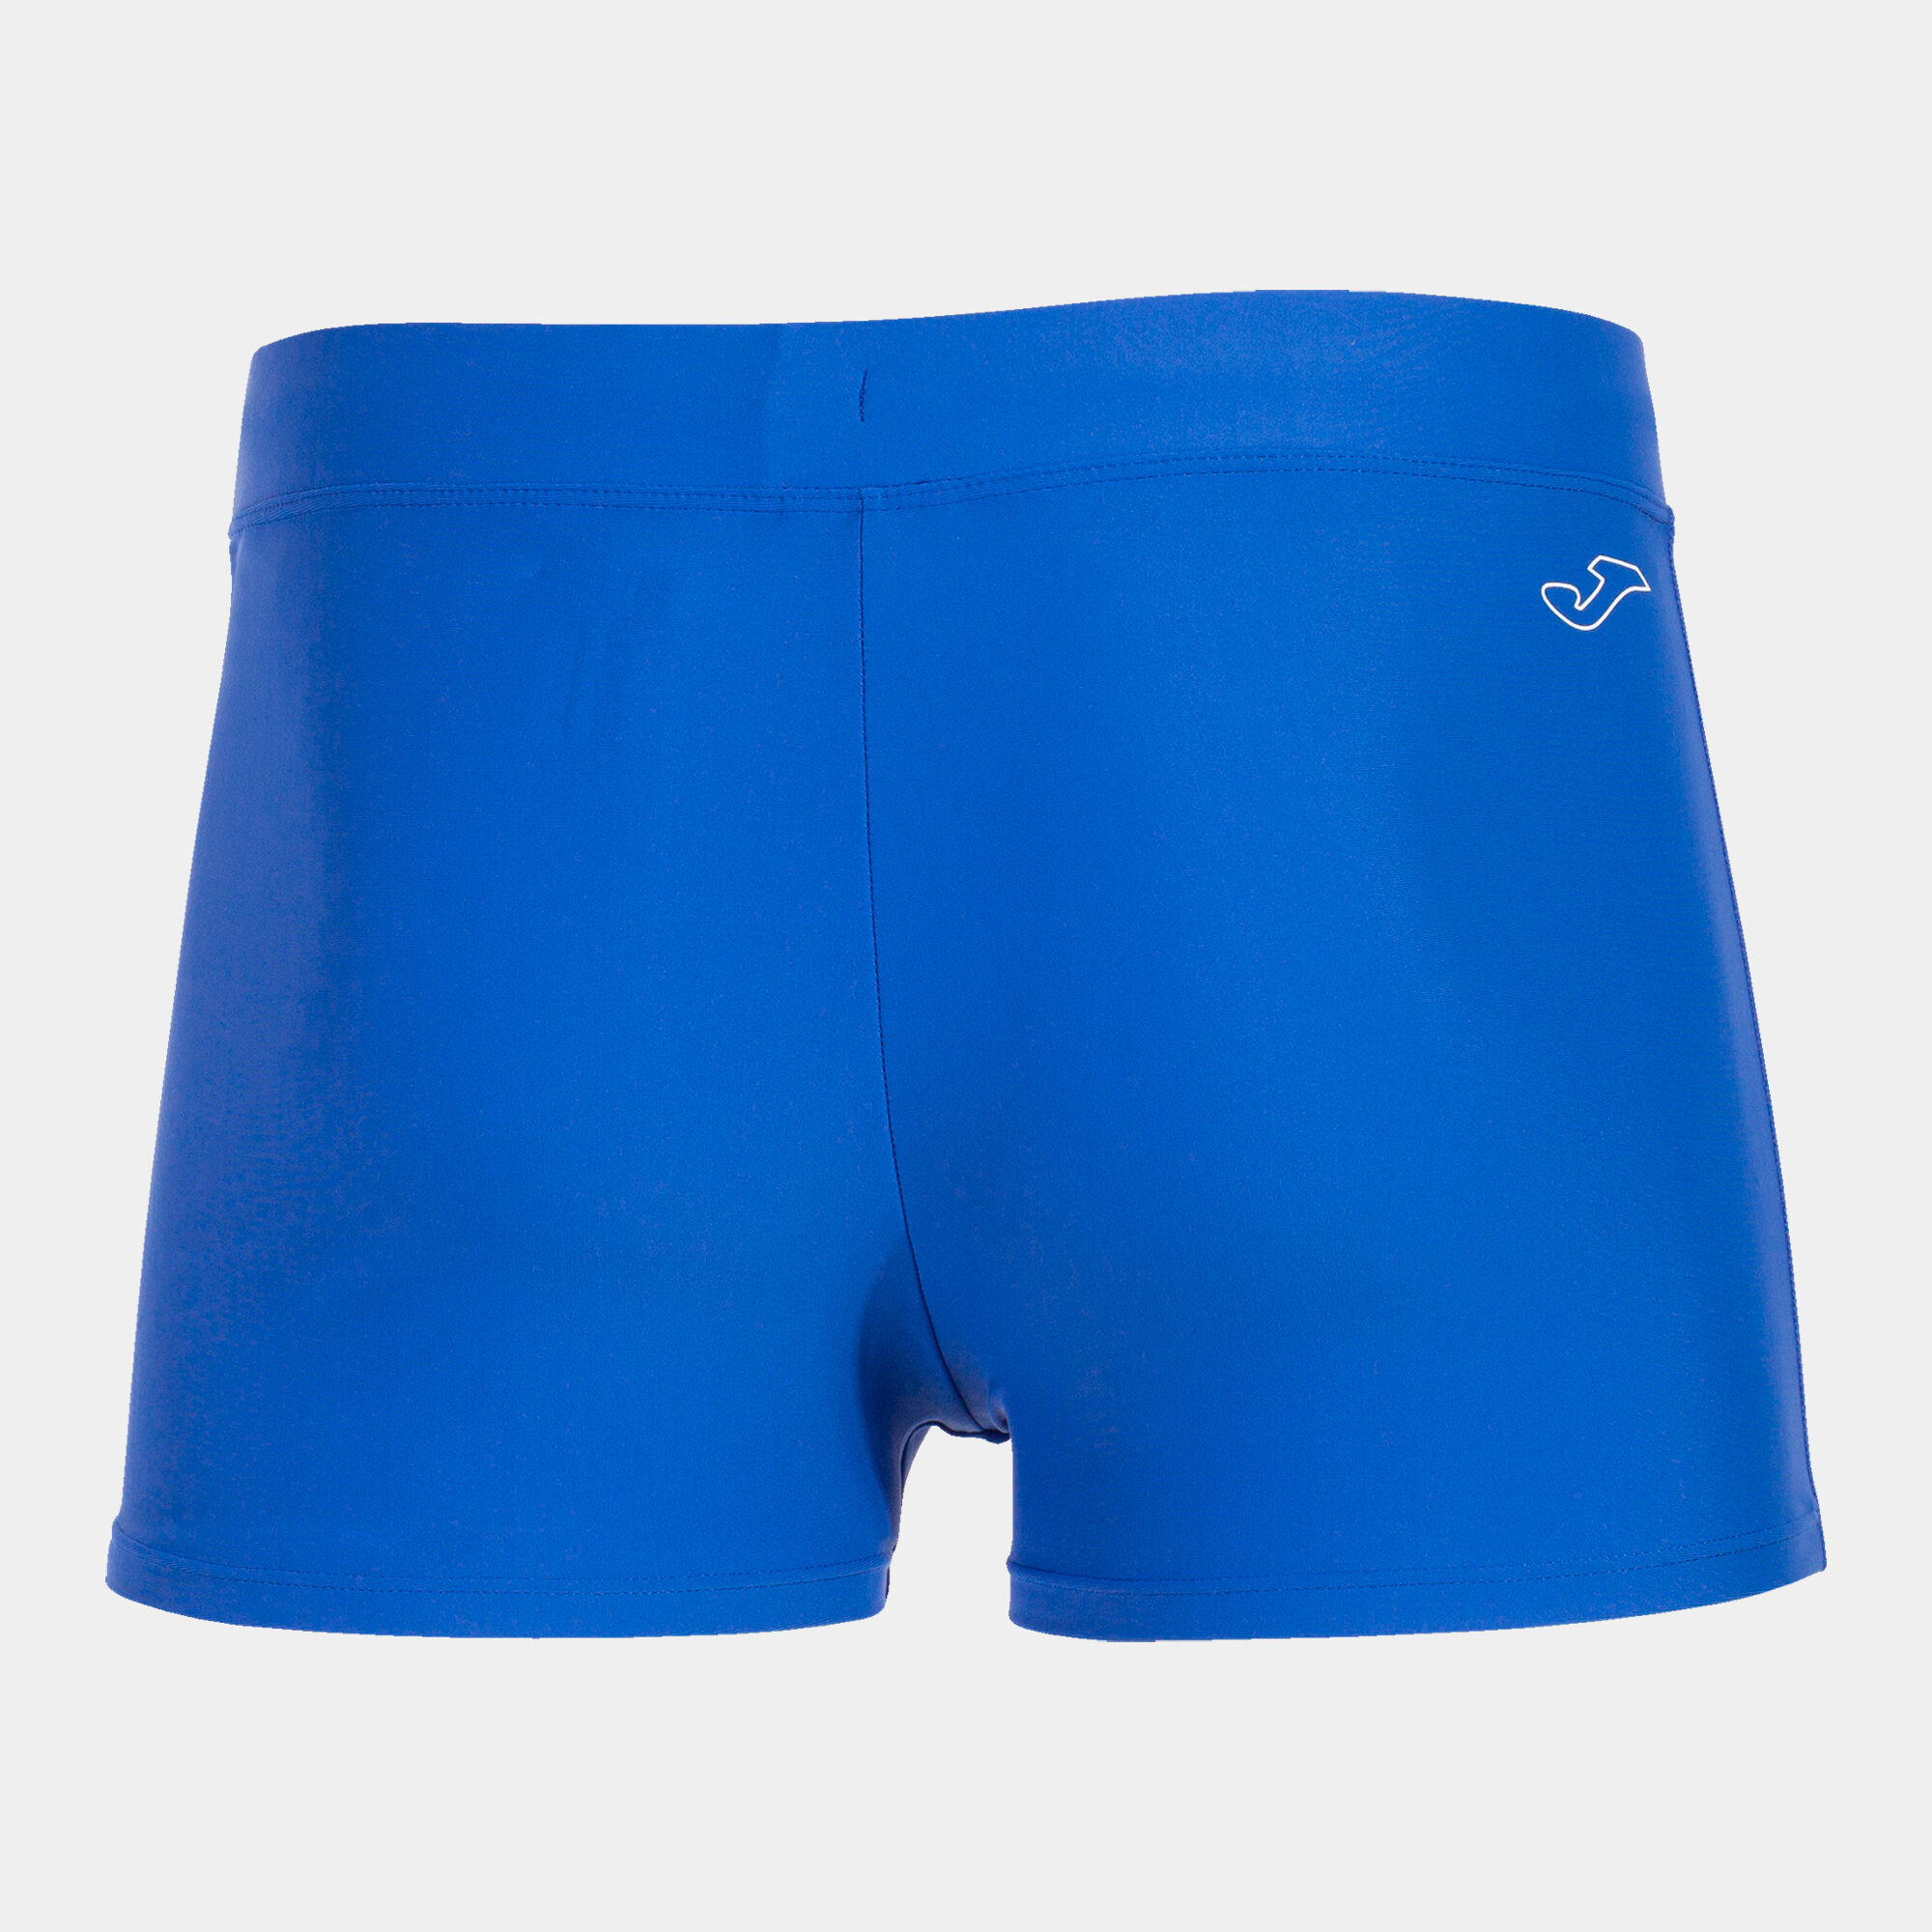 Swimming shorts man Splash royal blue